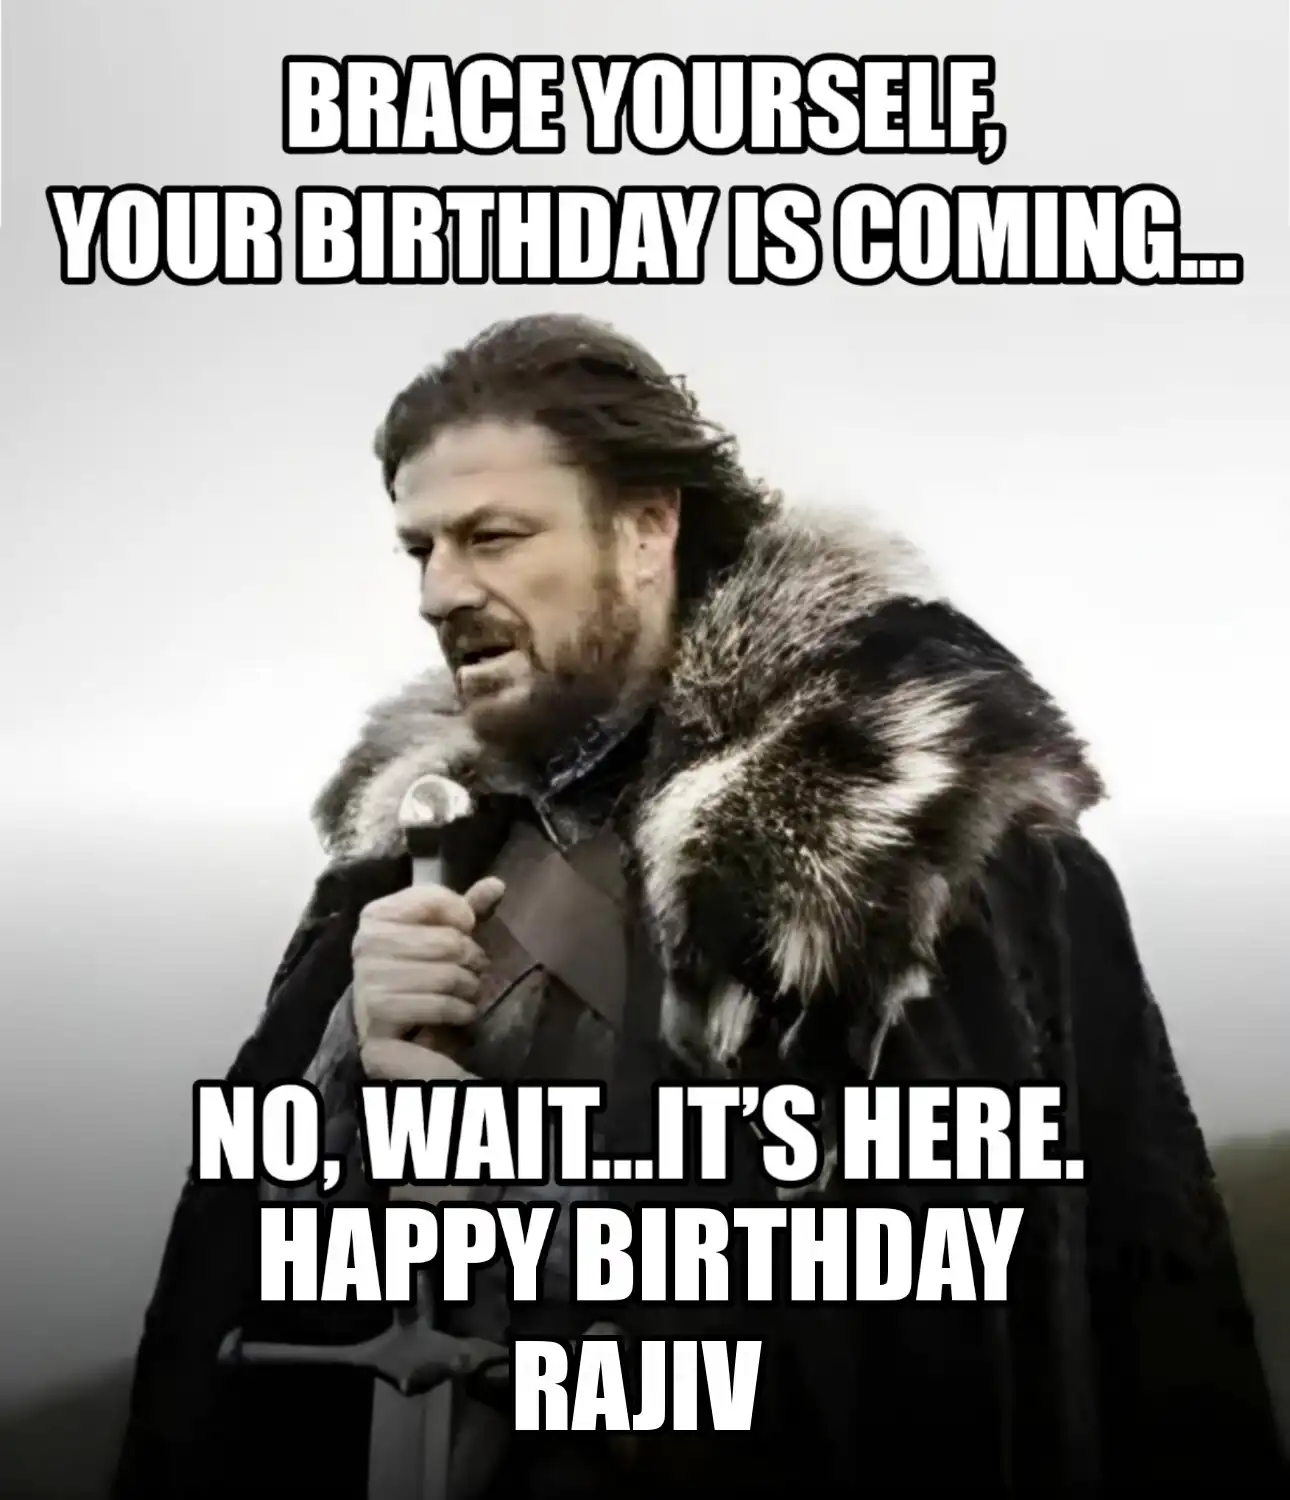 Happy Birthday Rajiv Brace Yourself Your Birthday Is Coming Meme